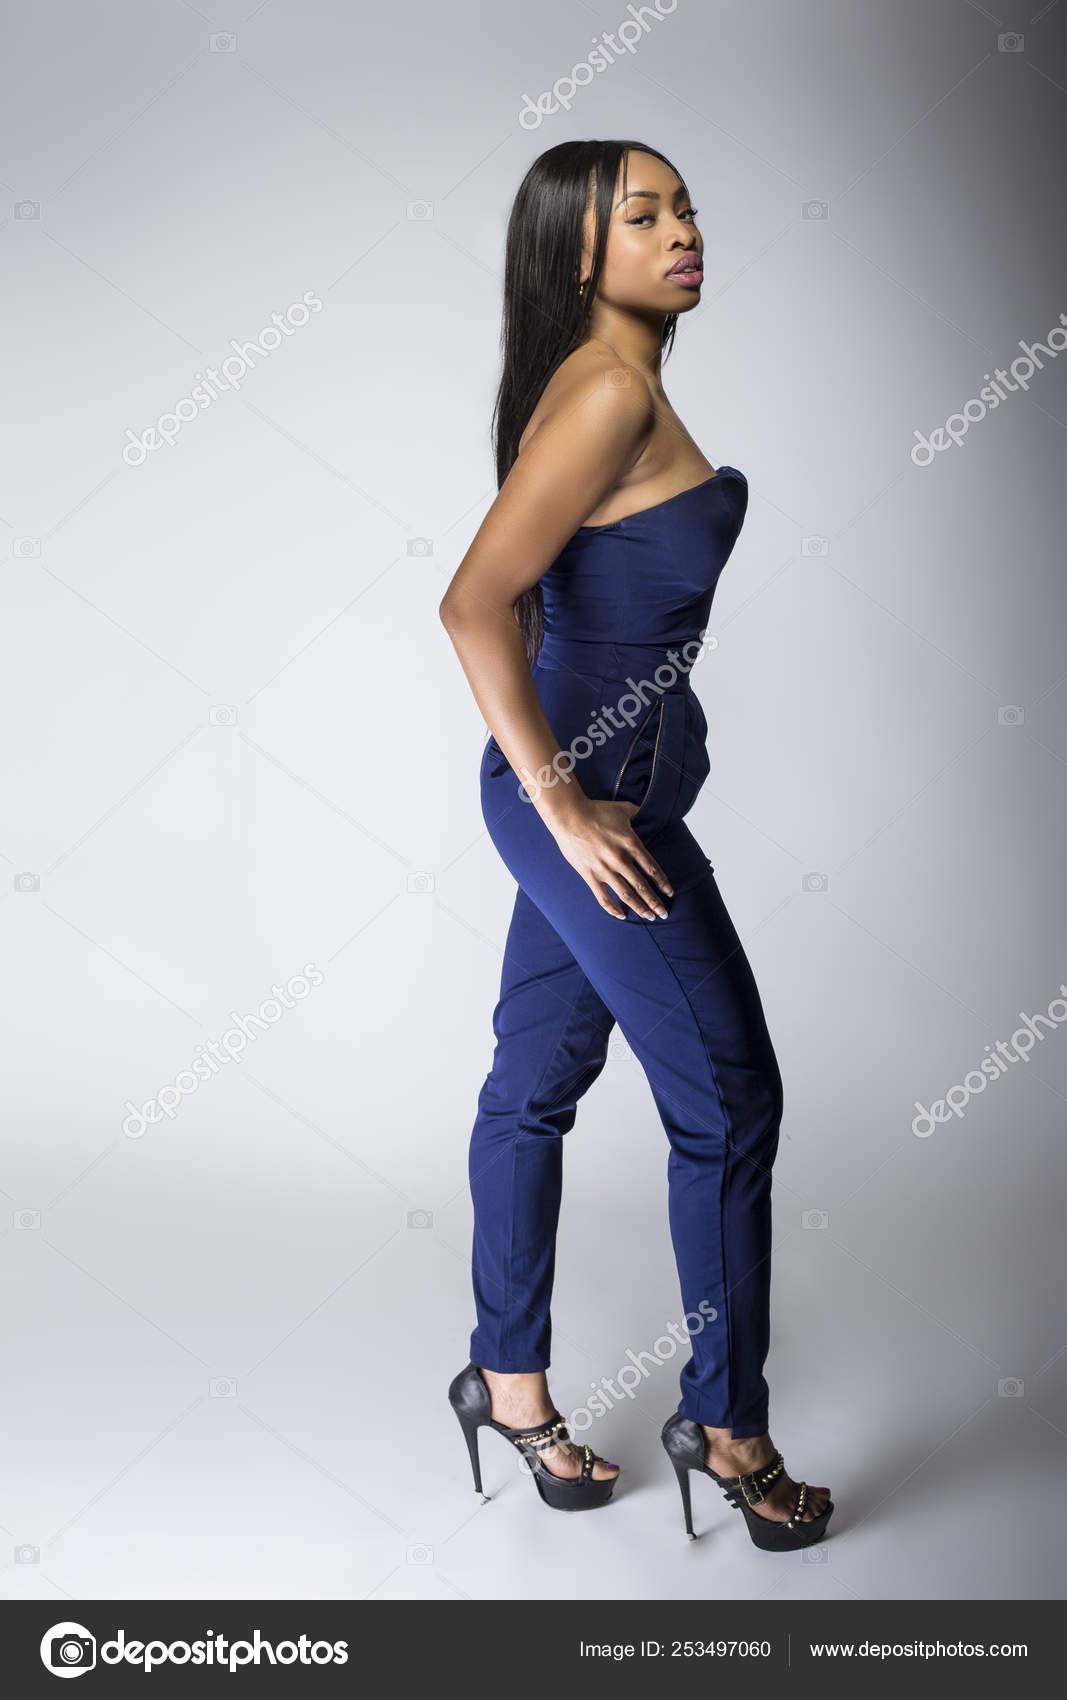 https://st4.depositphotos.com/3438085/25349/i/1600/depositphotos_253497060-stock-photo-sexy-black-female-fashion-model.jpg